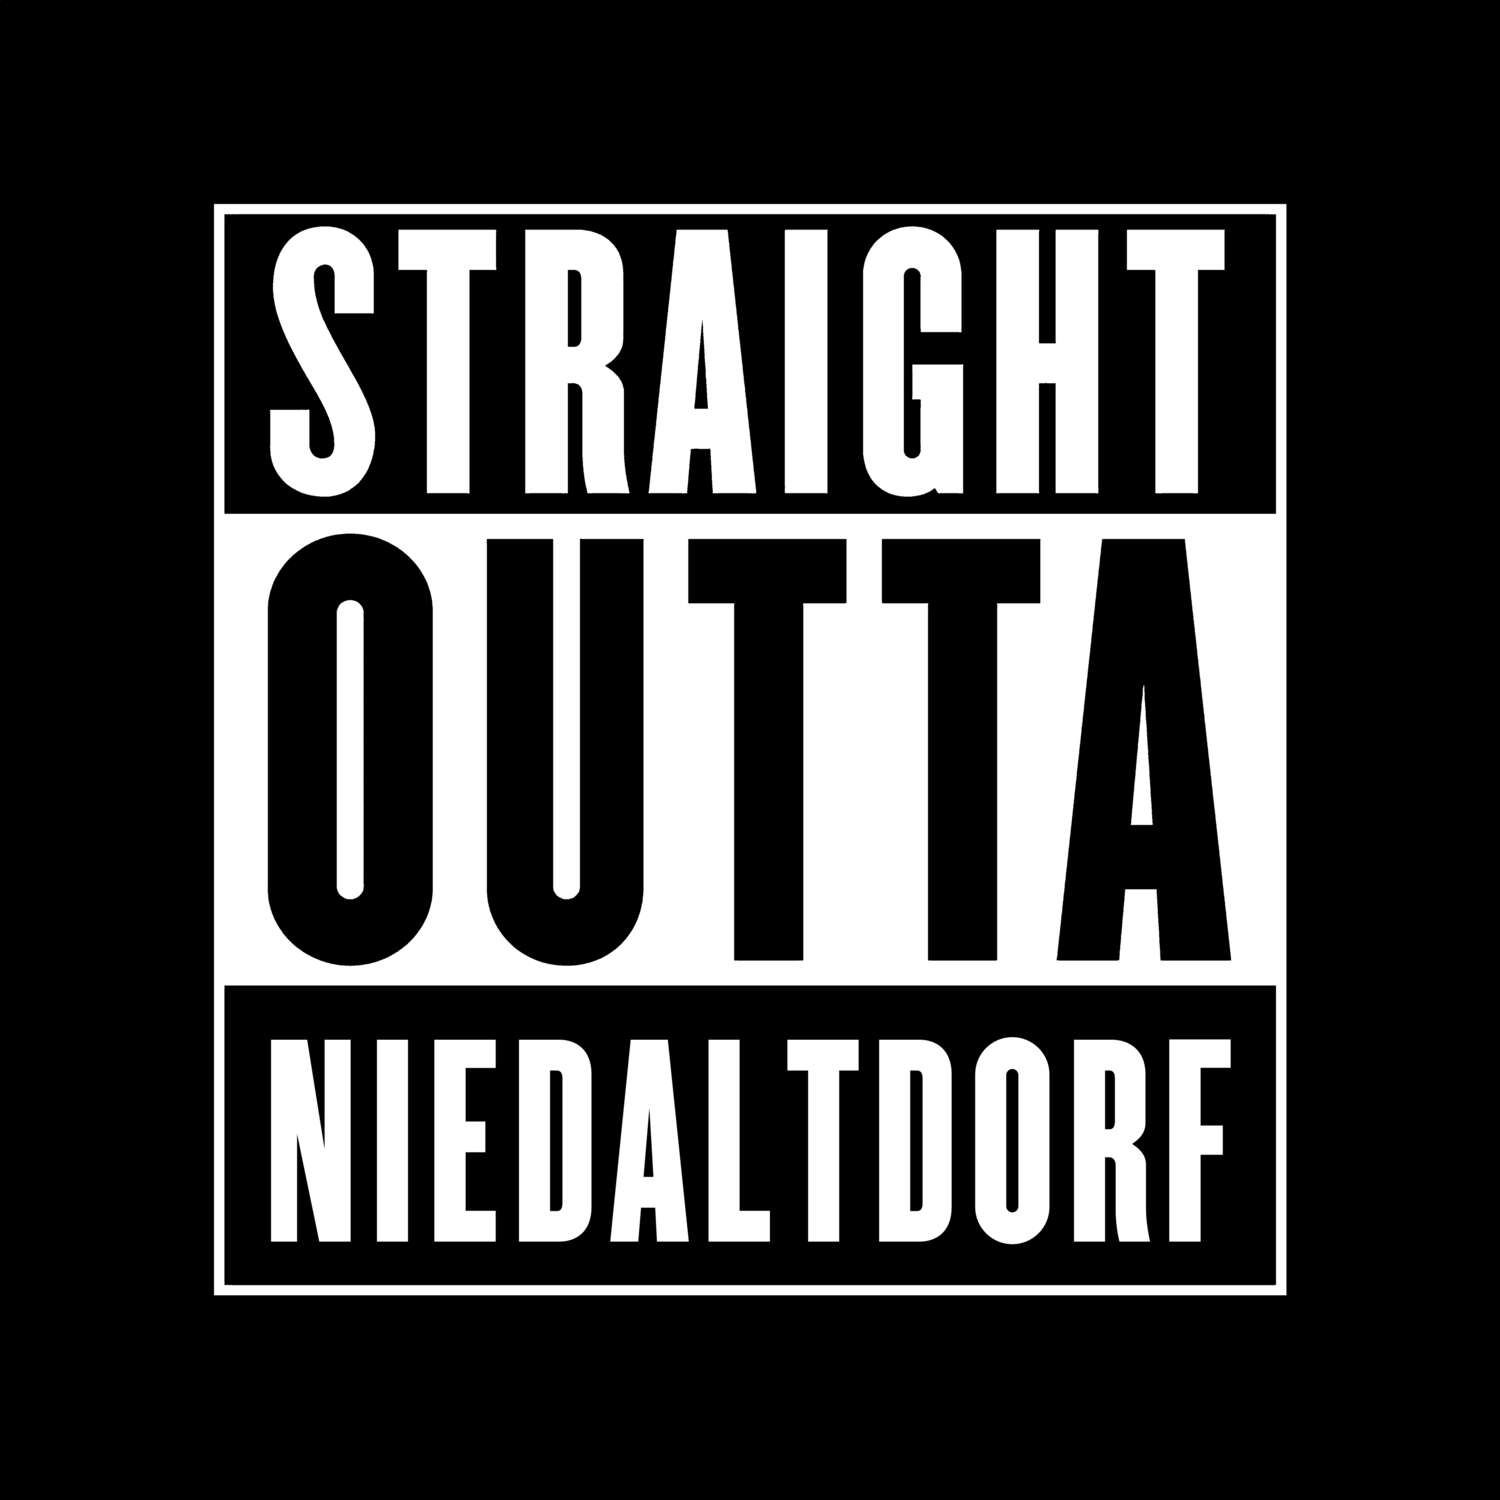 Niedaltdorf T-Shirt »Straight Outta«